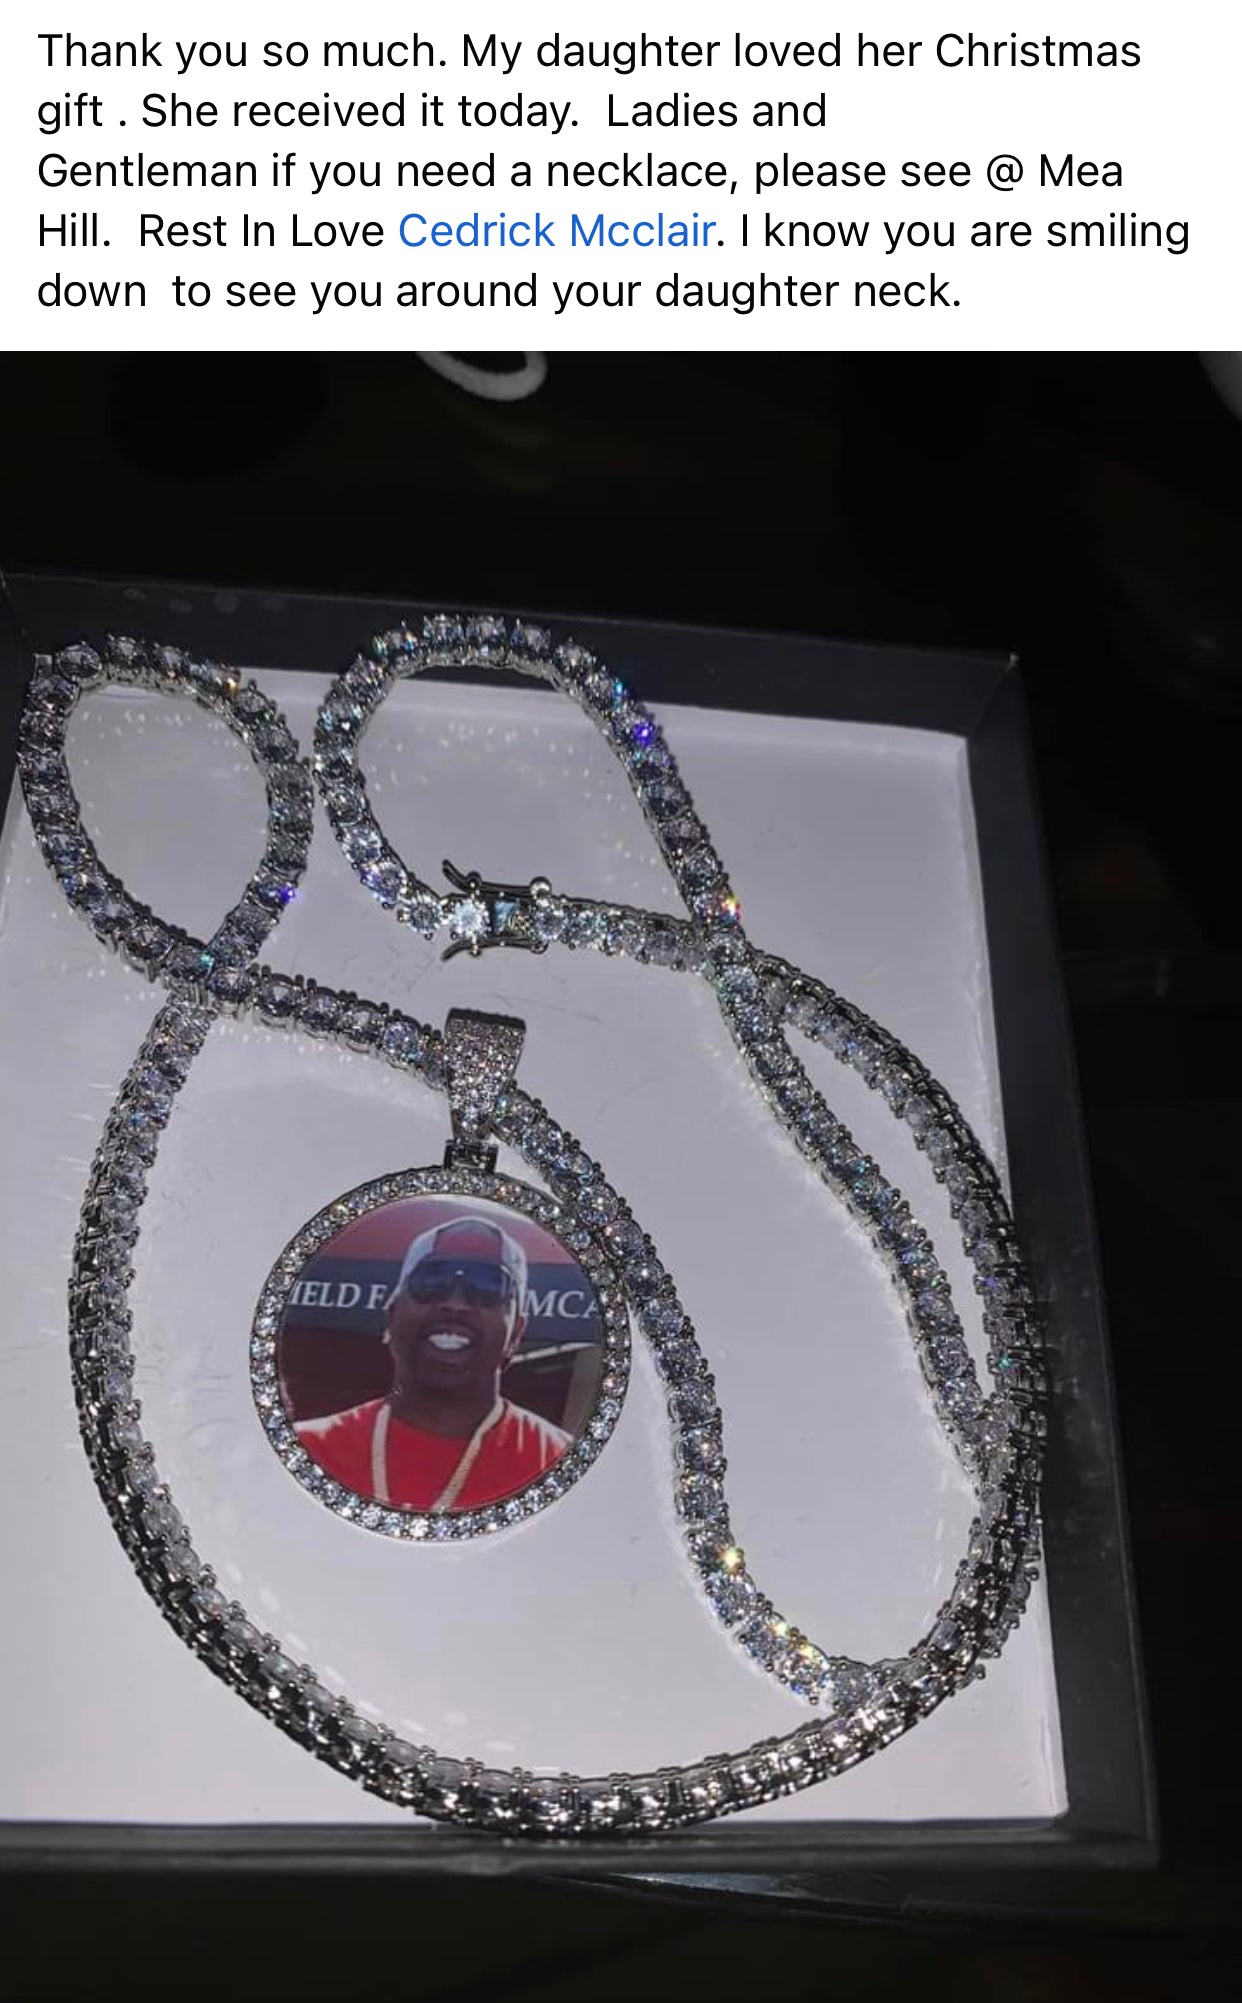 Custom Necklace